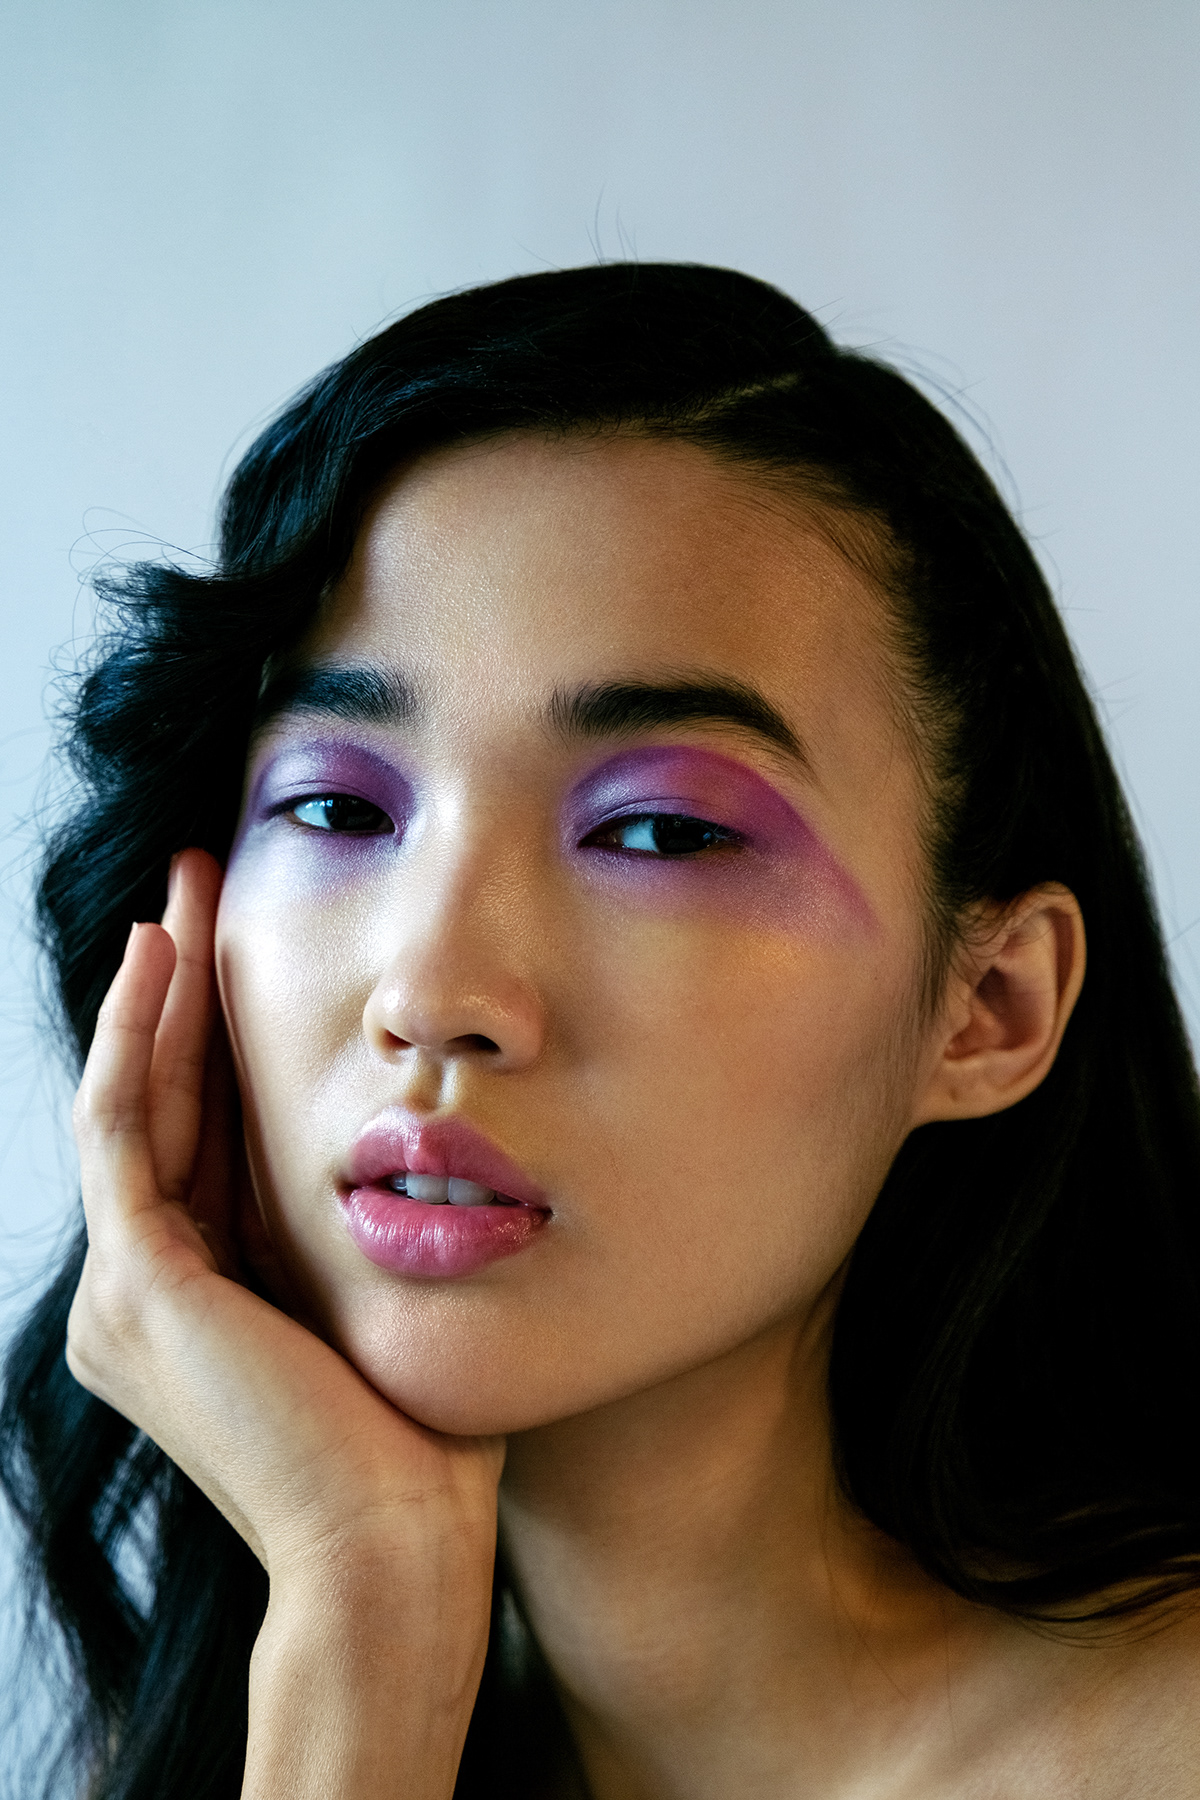 agency model Asian Model beauty Fashion  London Photographer makeup artist